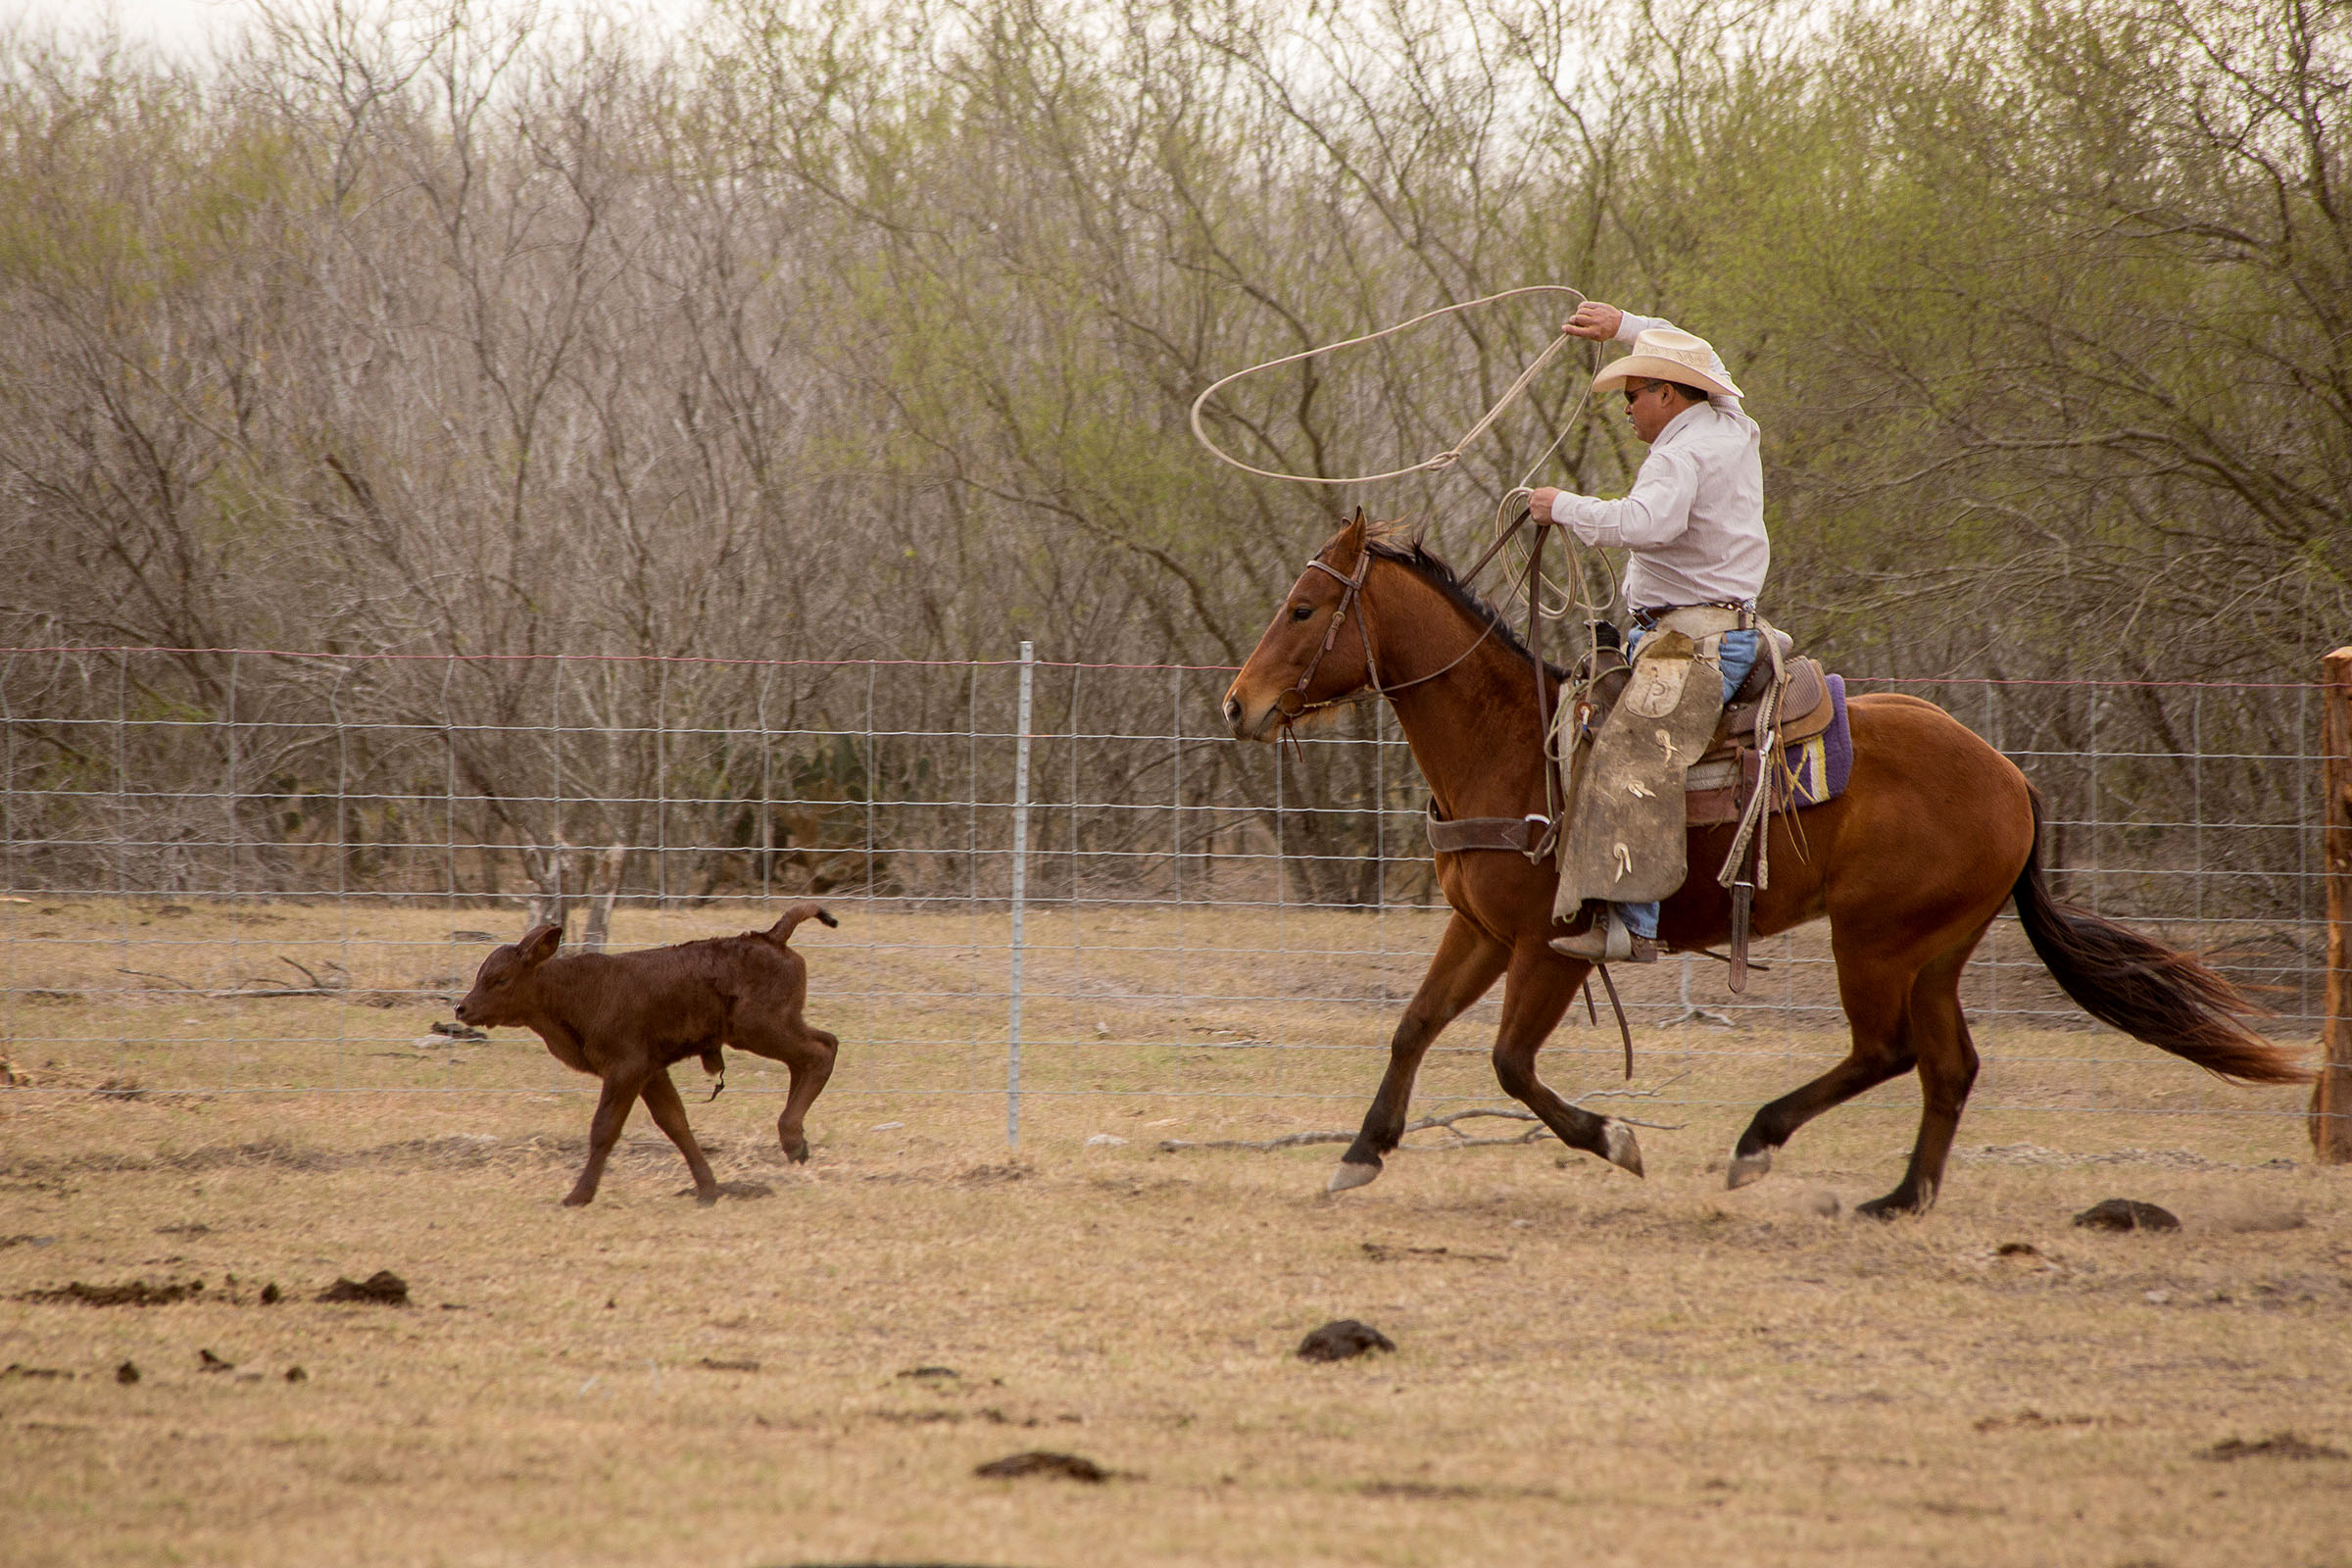 A cowboy on a horse lassos a calf on a dirt field.